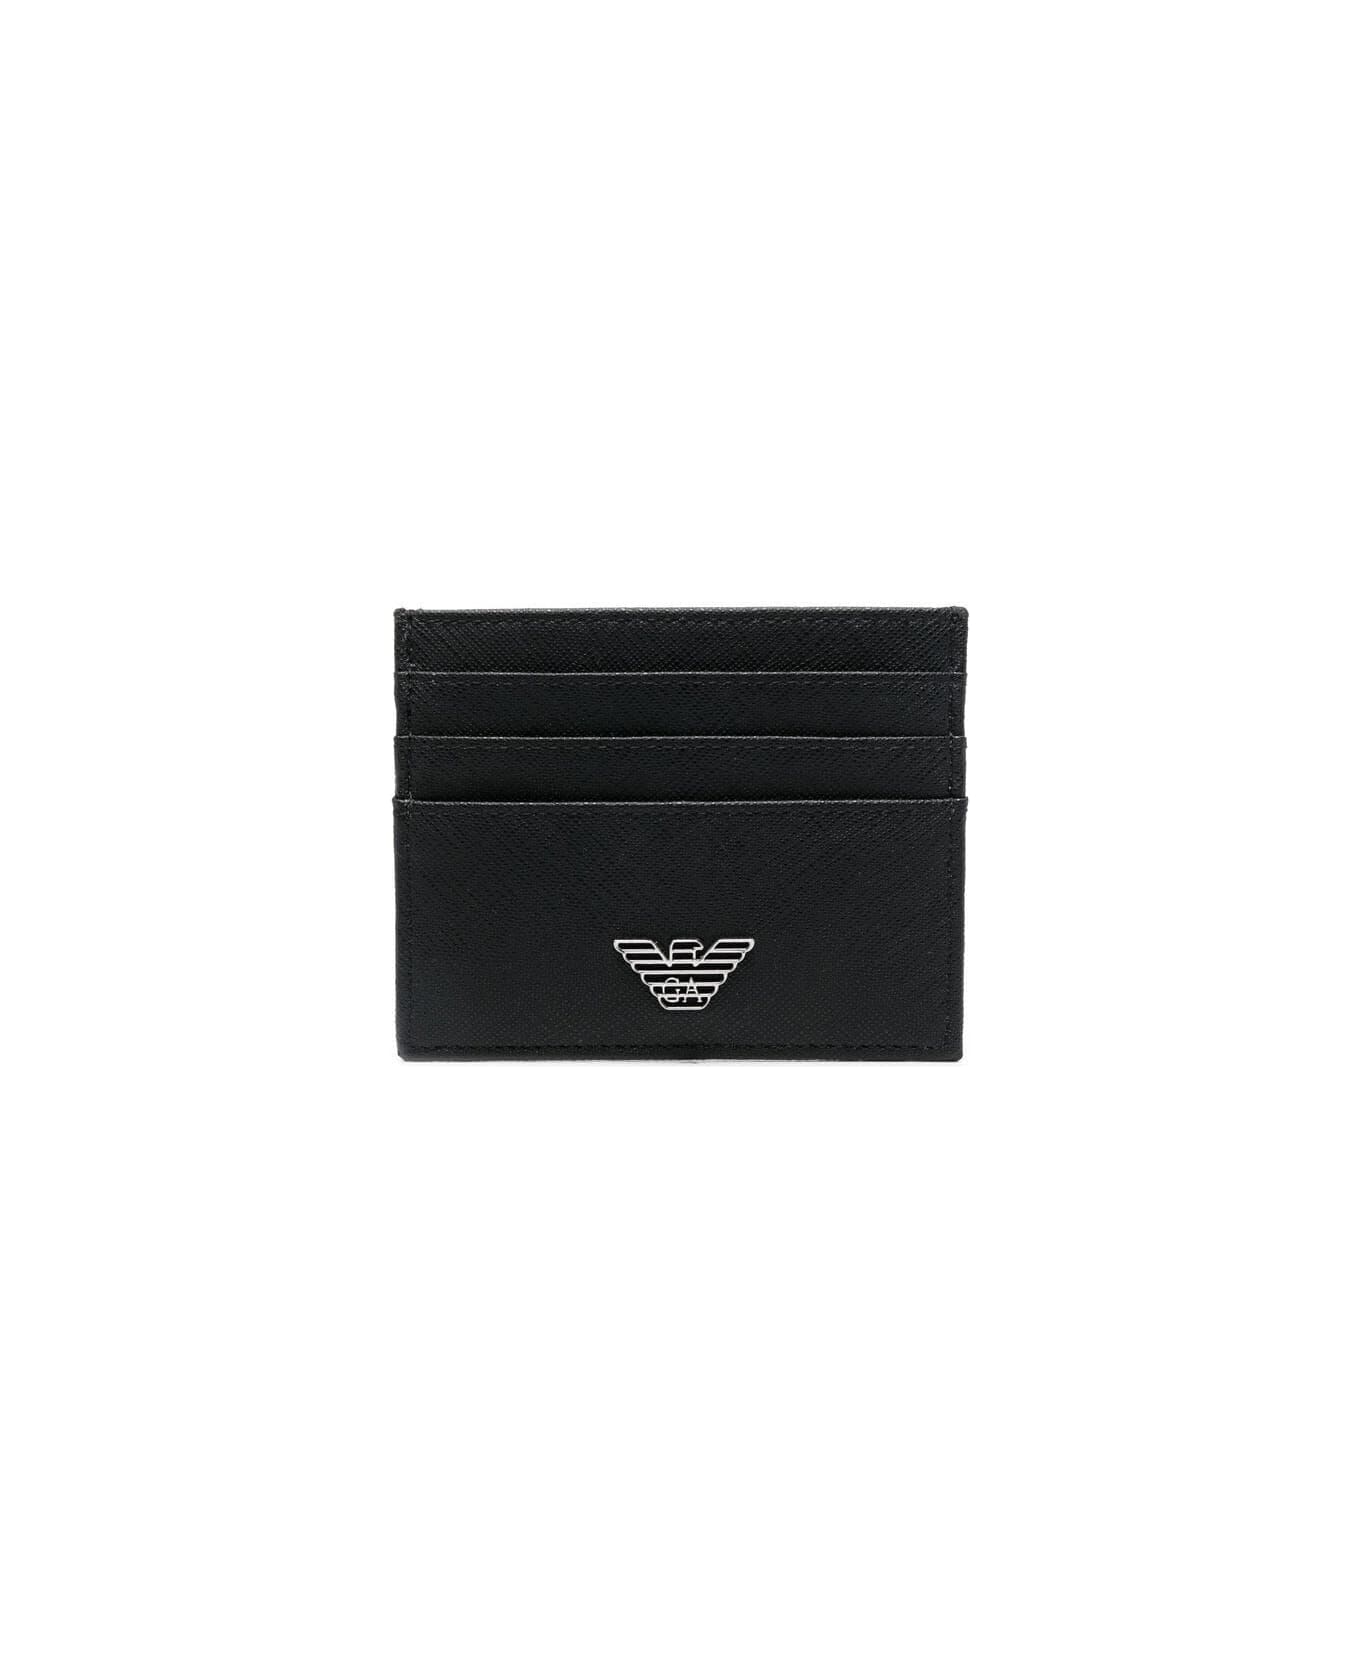 Emporio Armani Credit Card Holder - Black